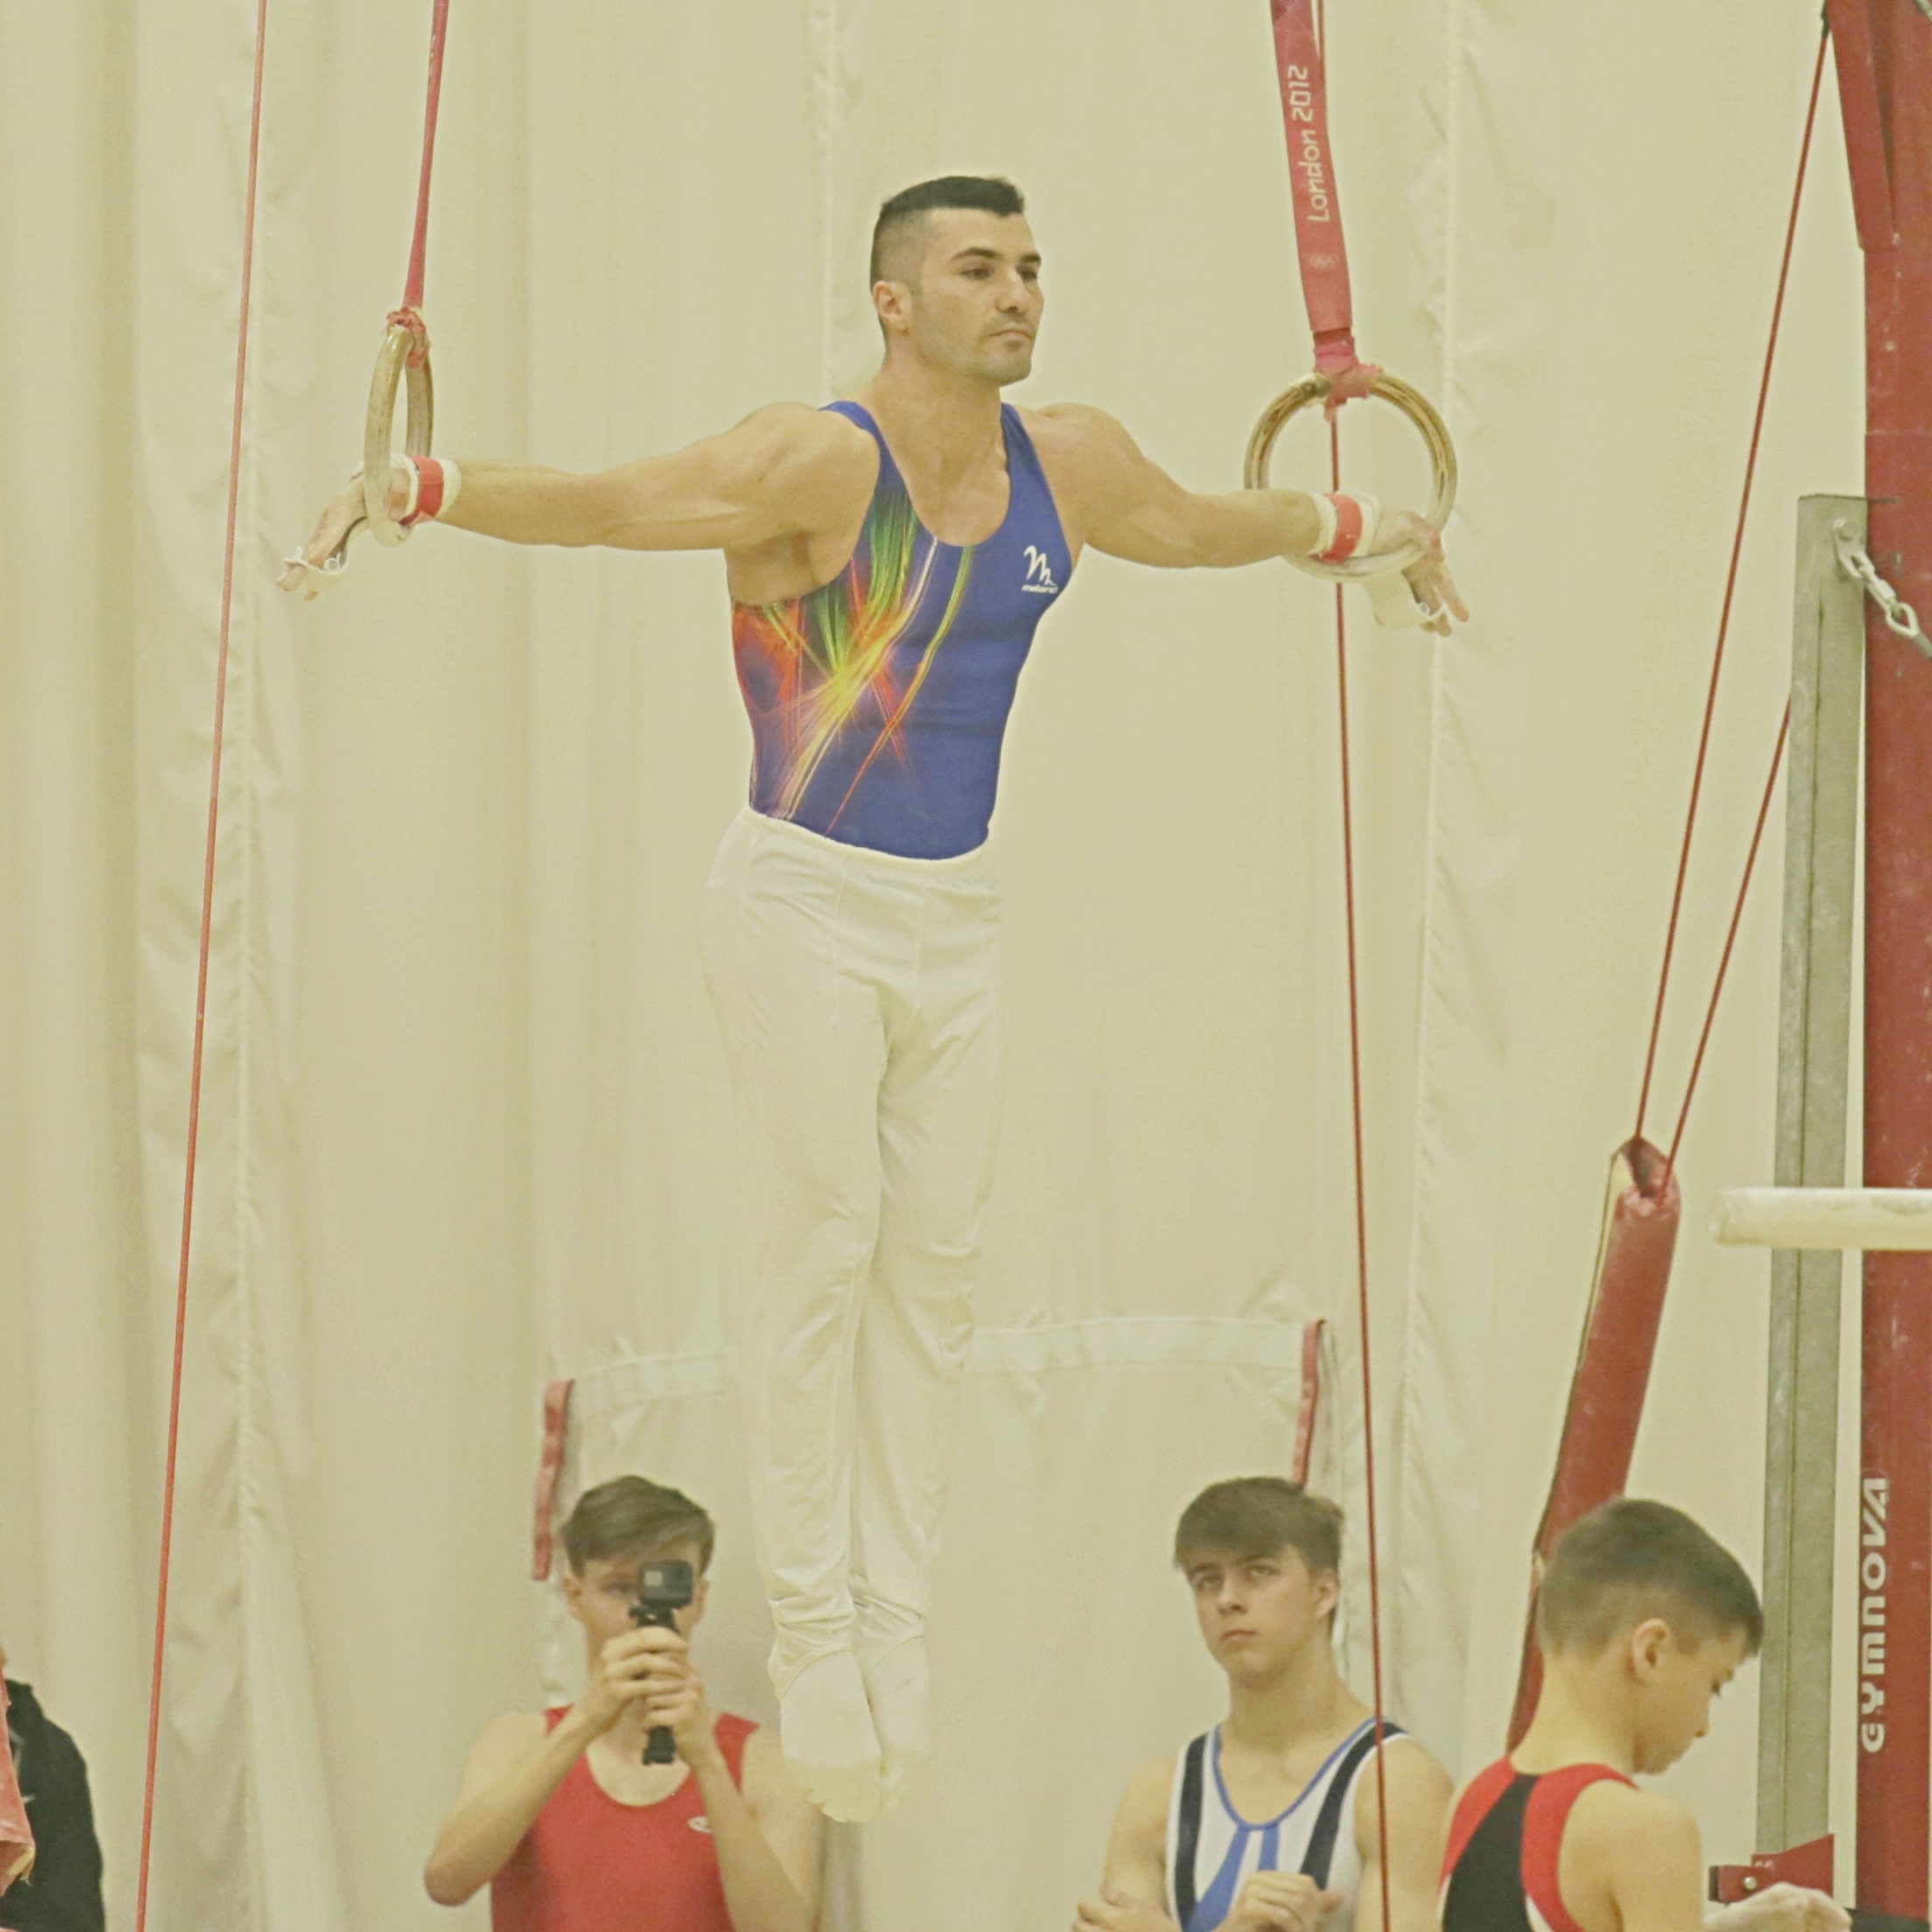 Milano Gymnastics Leotard for Men